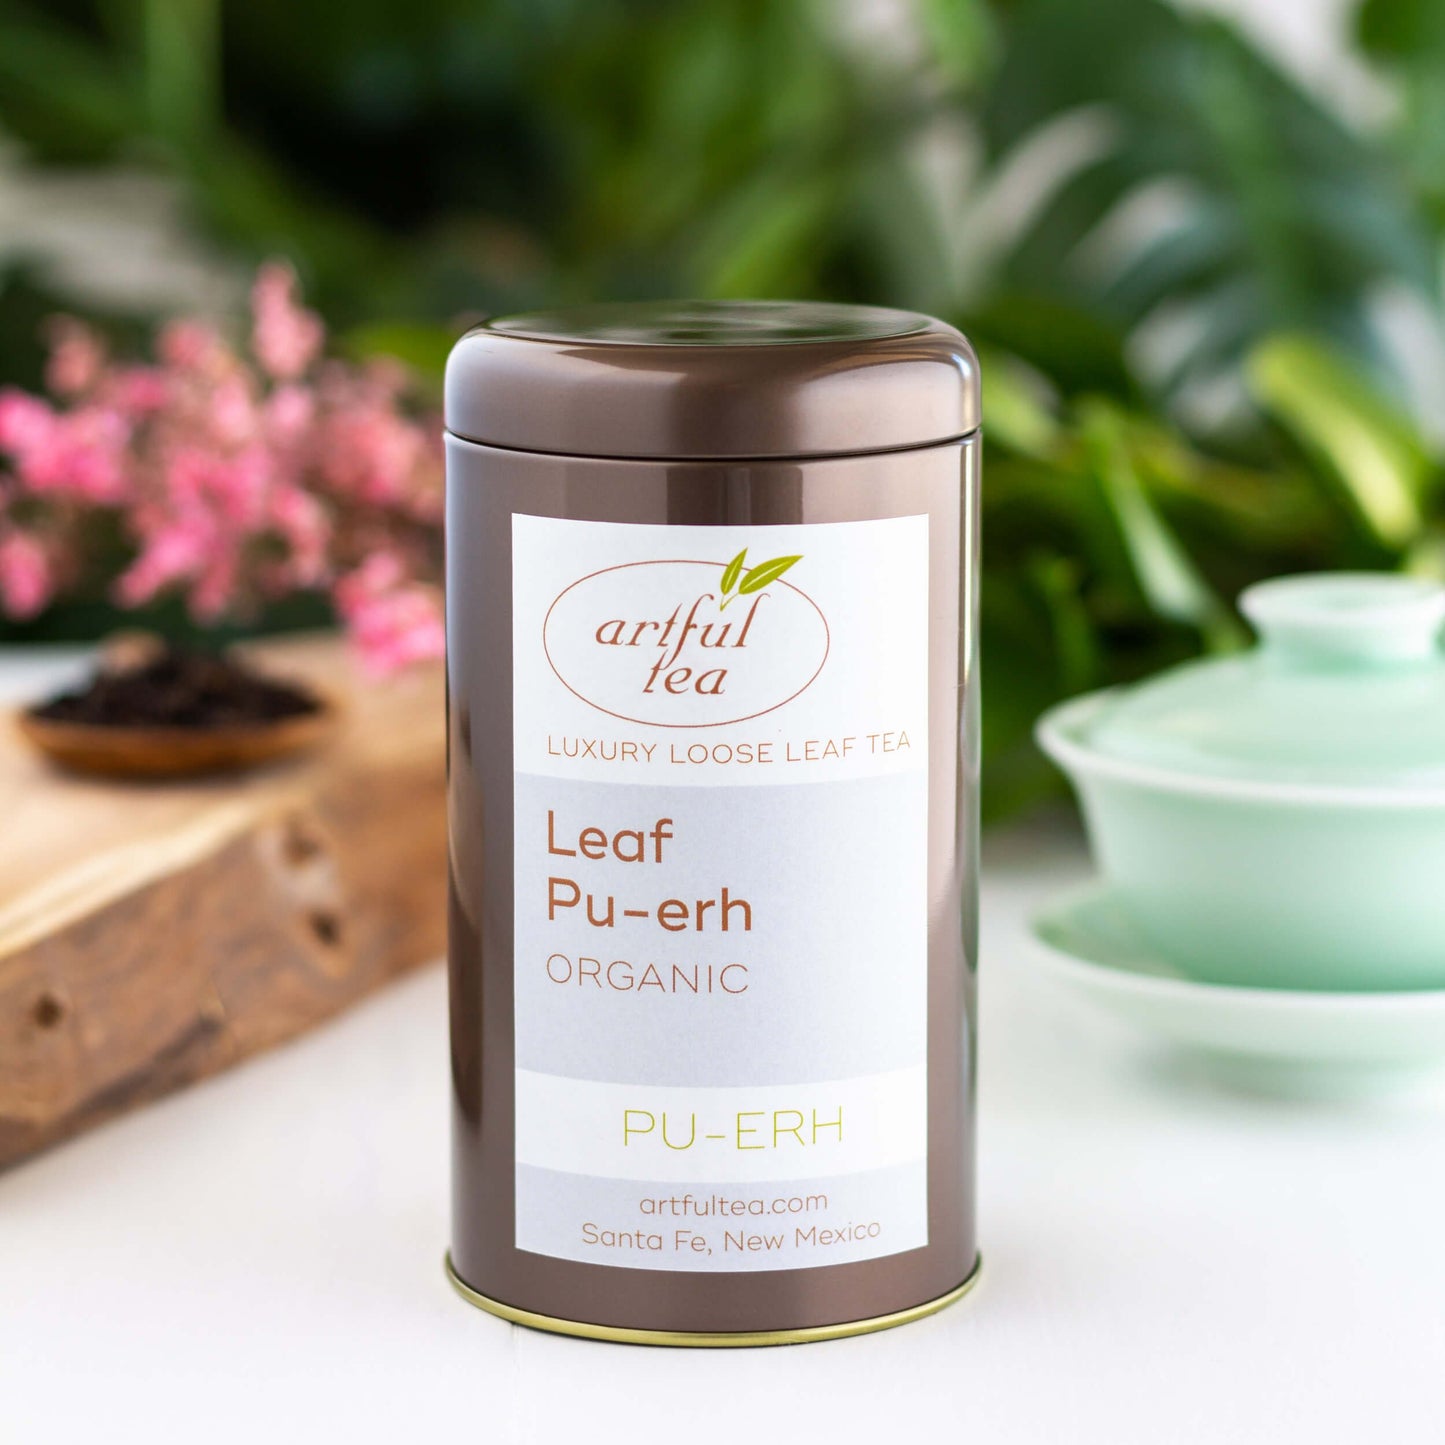 Organic Leaf Pu-erh Tea